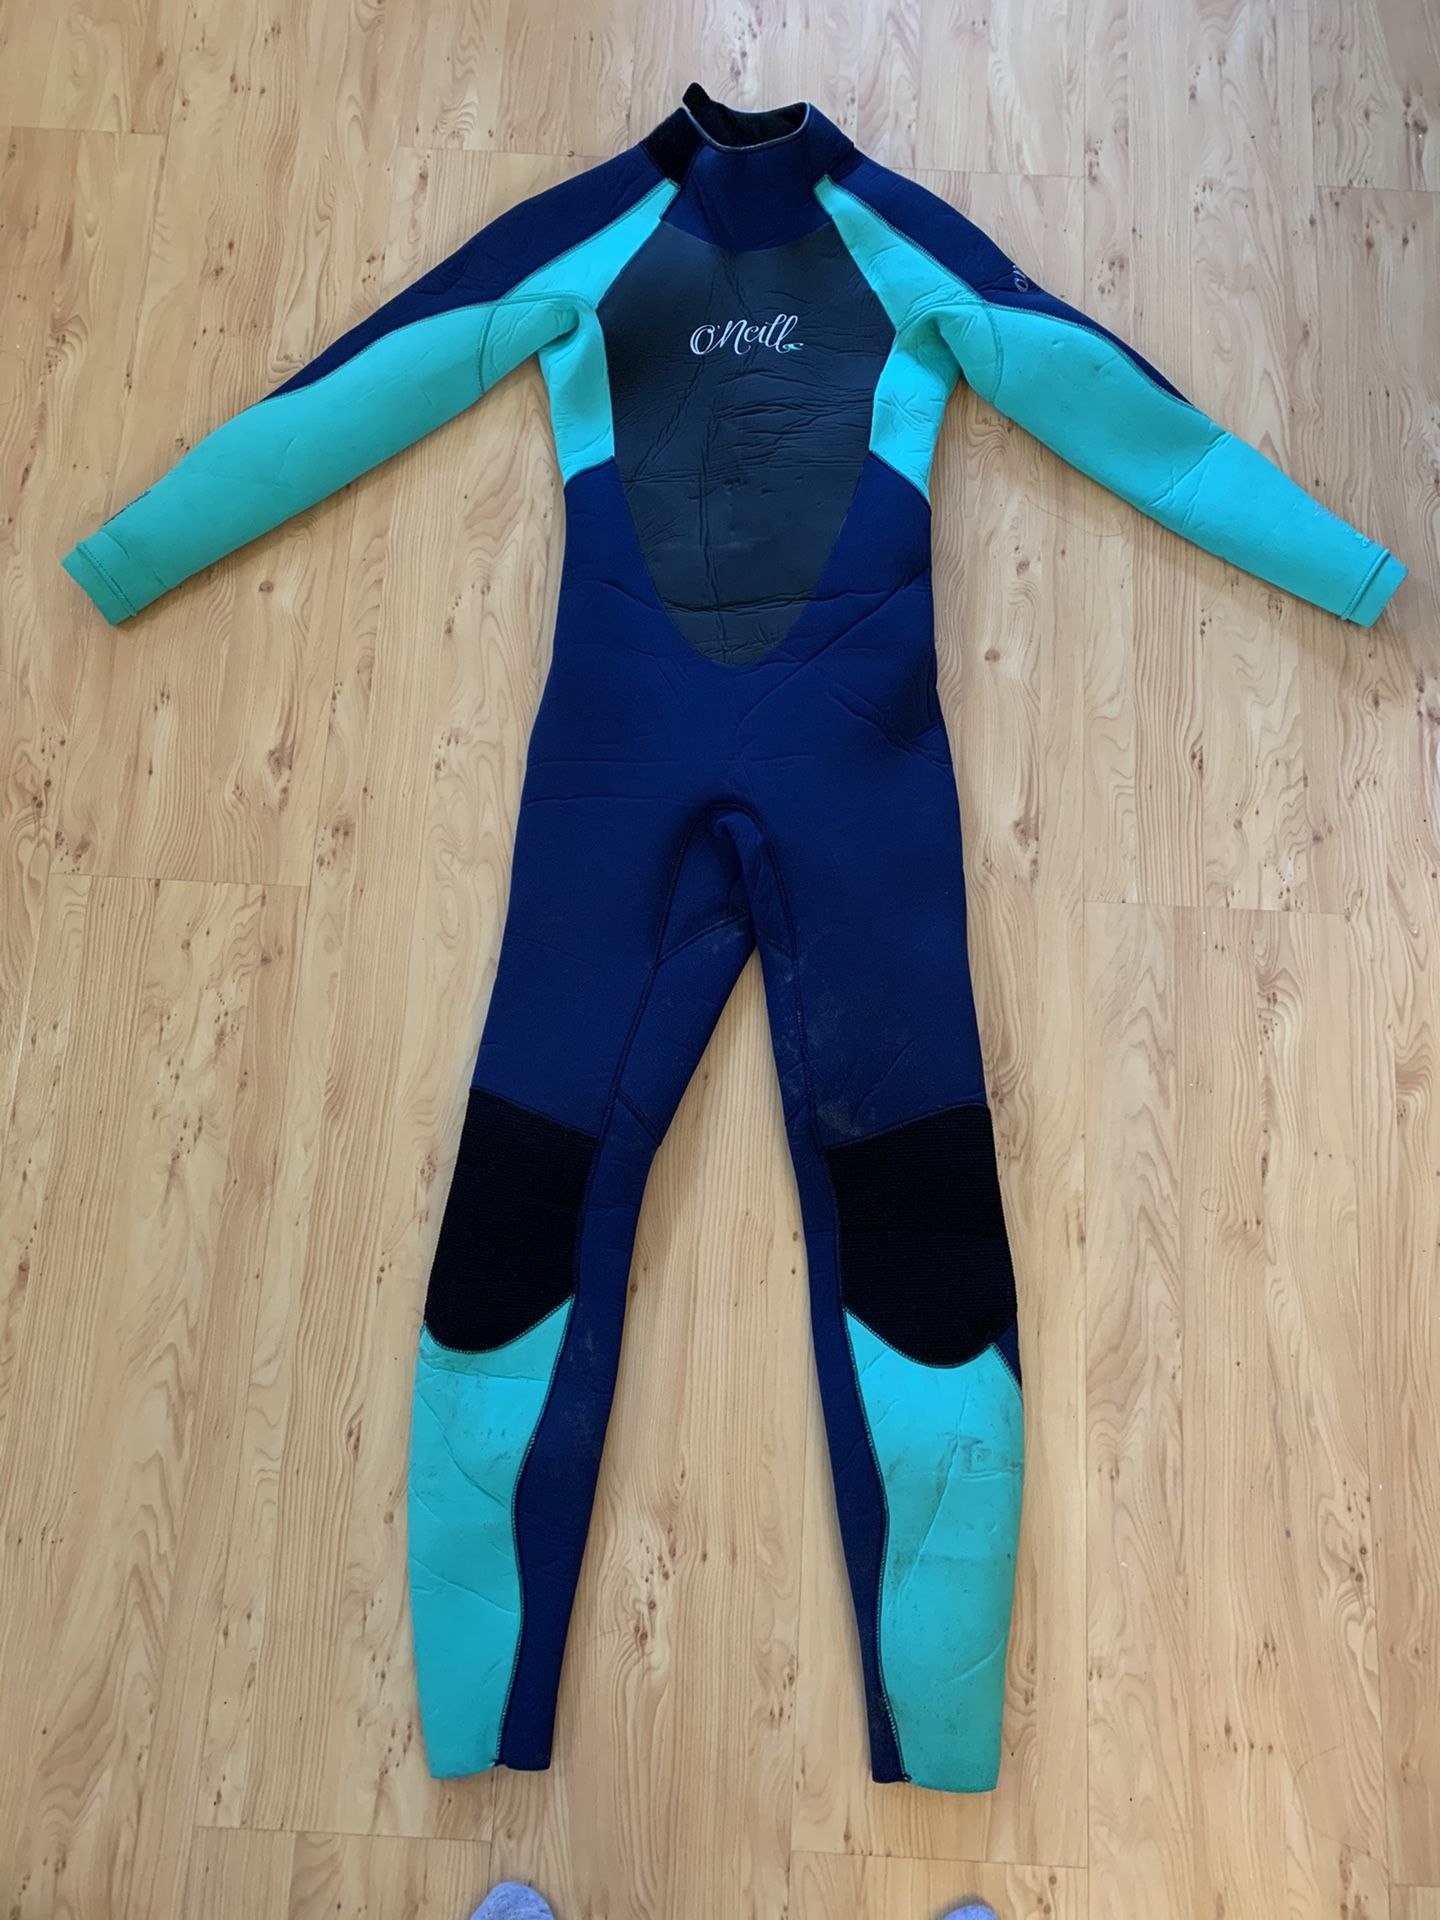 O’Neill, girls wetsuit, size 14